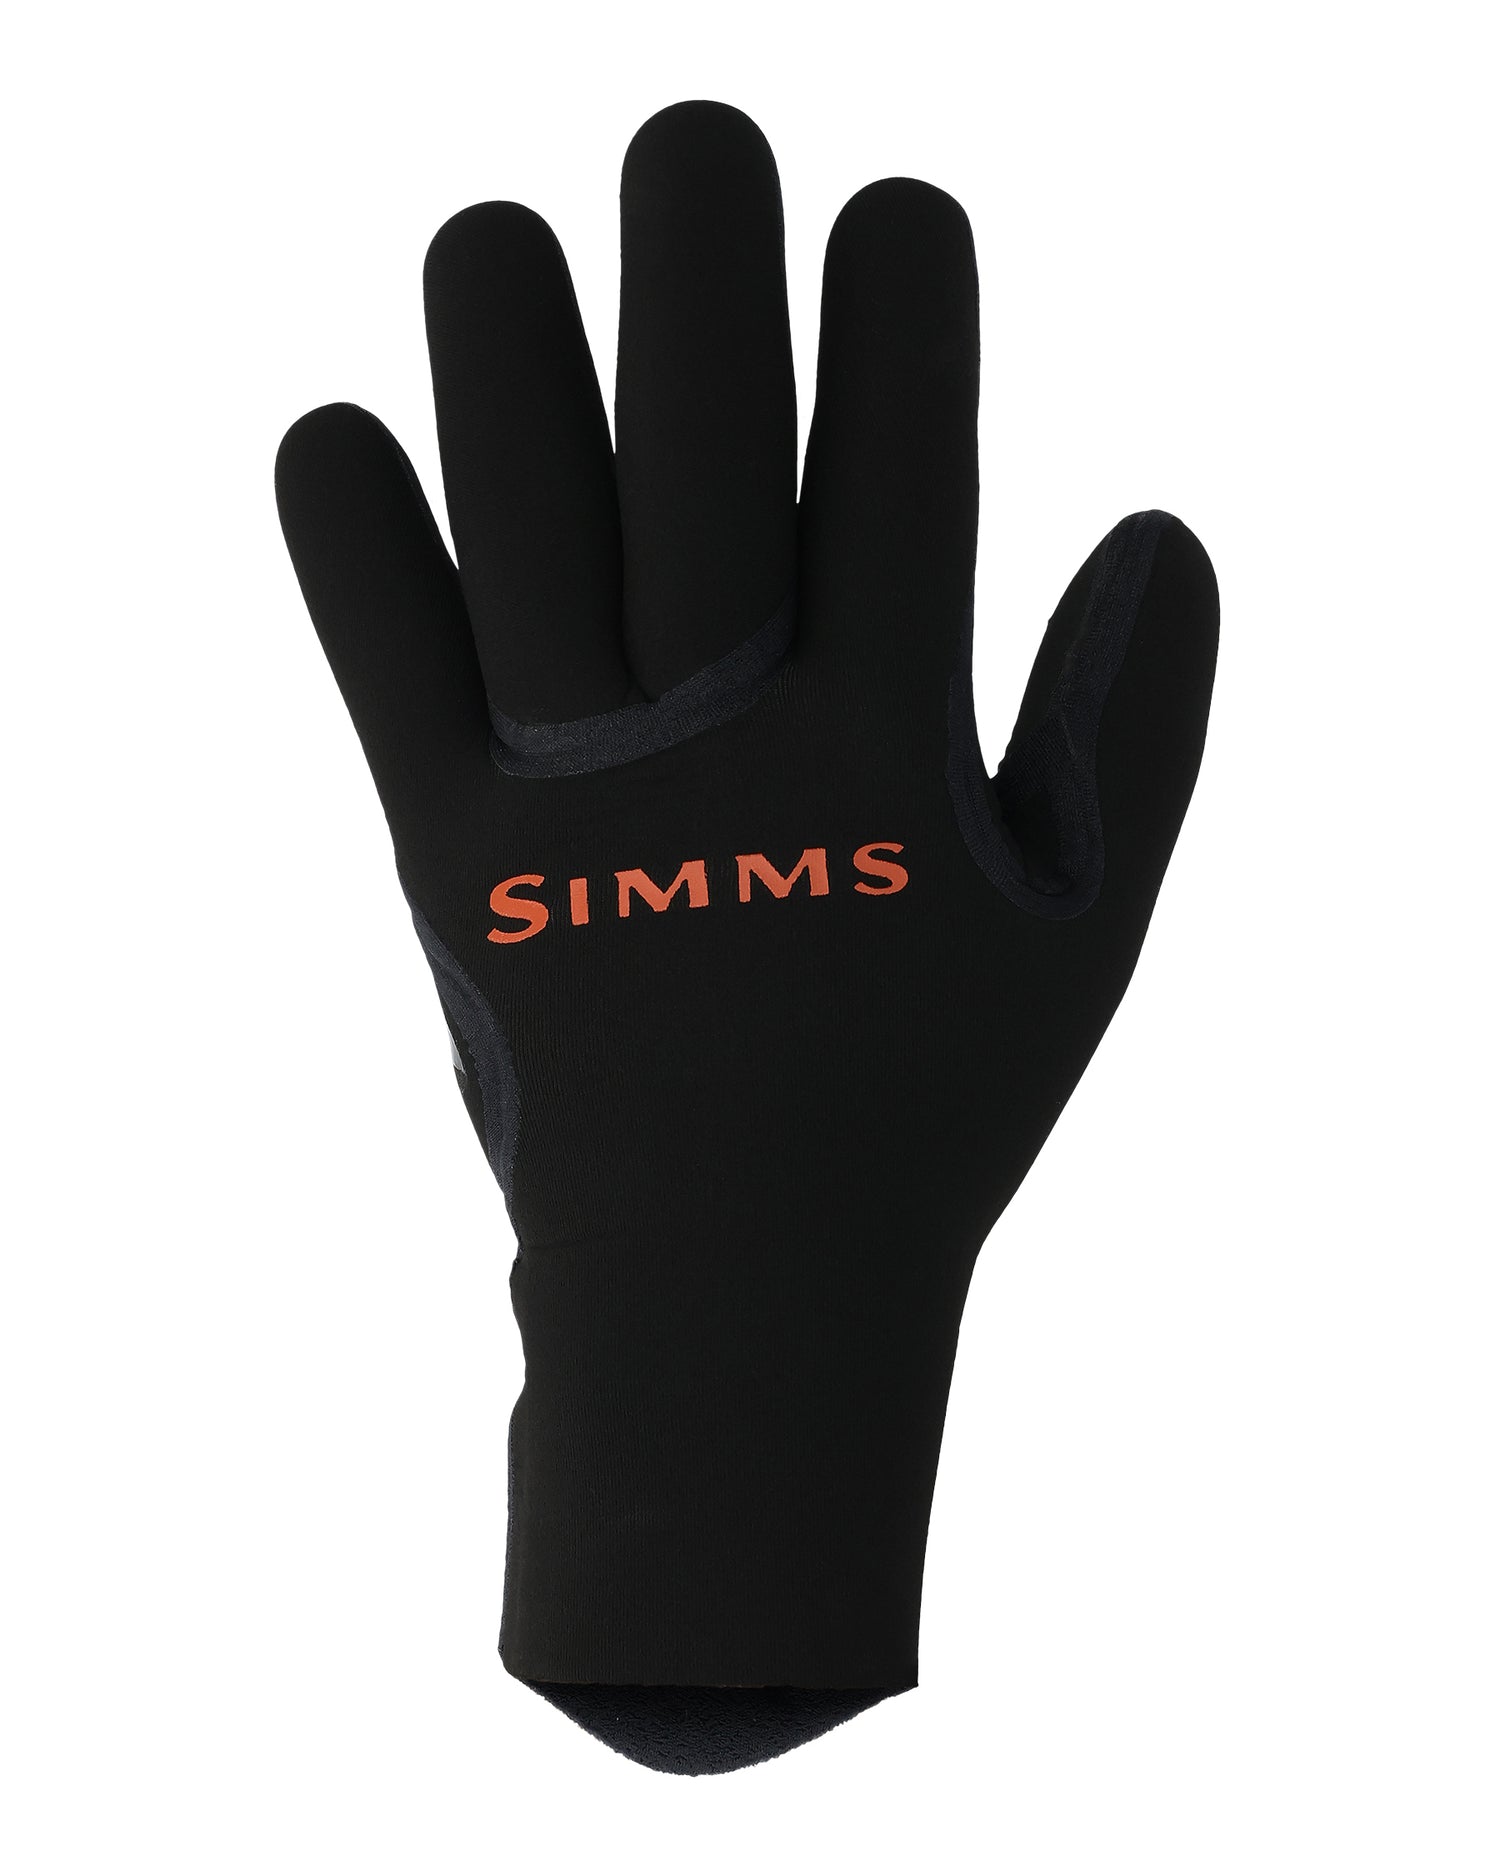 wholesale neoprene fishing gloves, wholesale neoprene fishing gloves  Suppliers and Manufacturers at